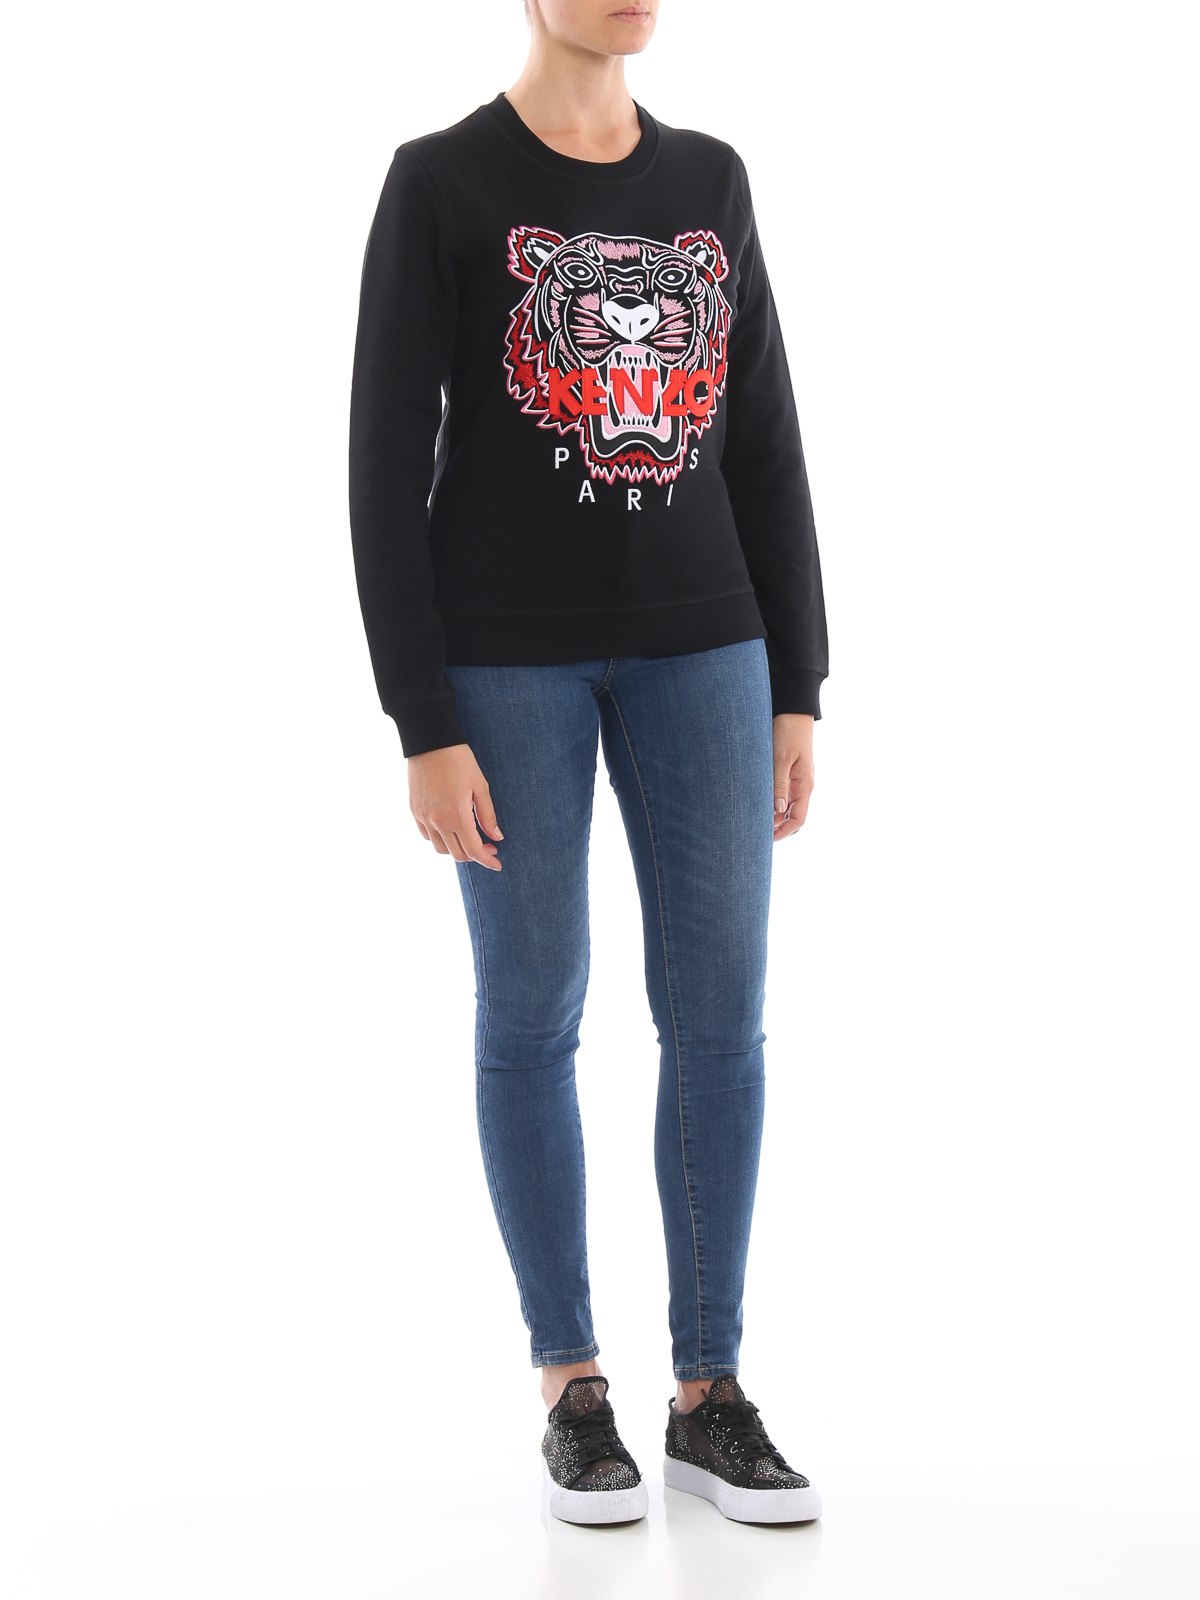 beetje Overtollig Blaast op Sweatshirts & Sweaters Kenzo - Classic Tiger slim sweatshirt -  F962SW7054XA99A